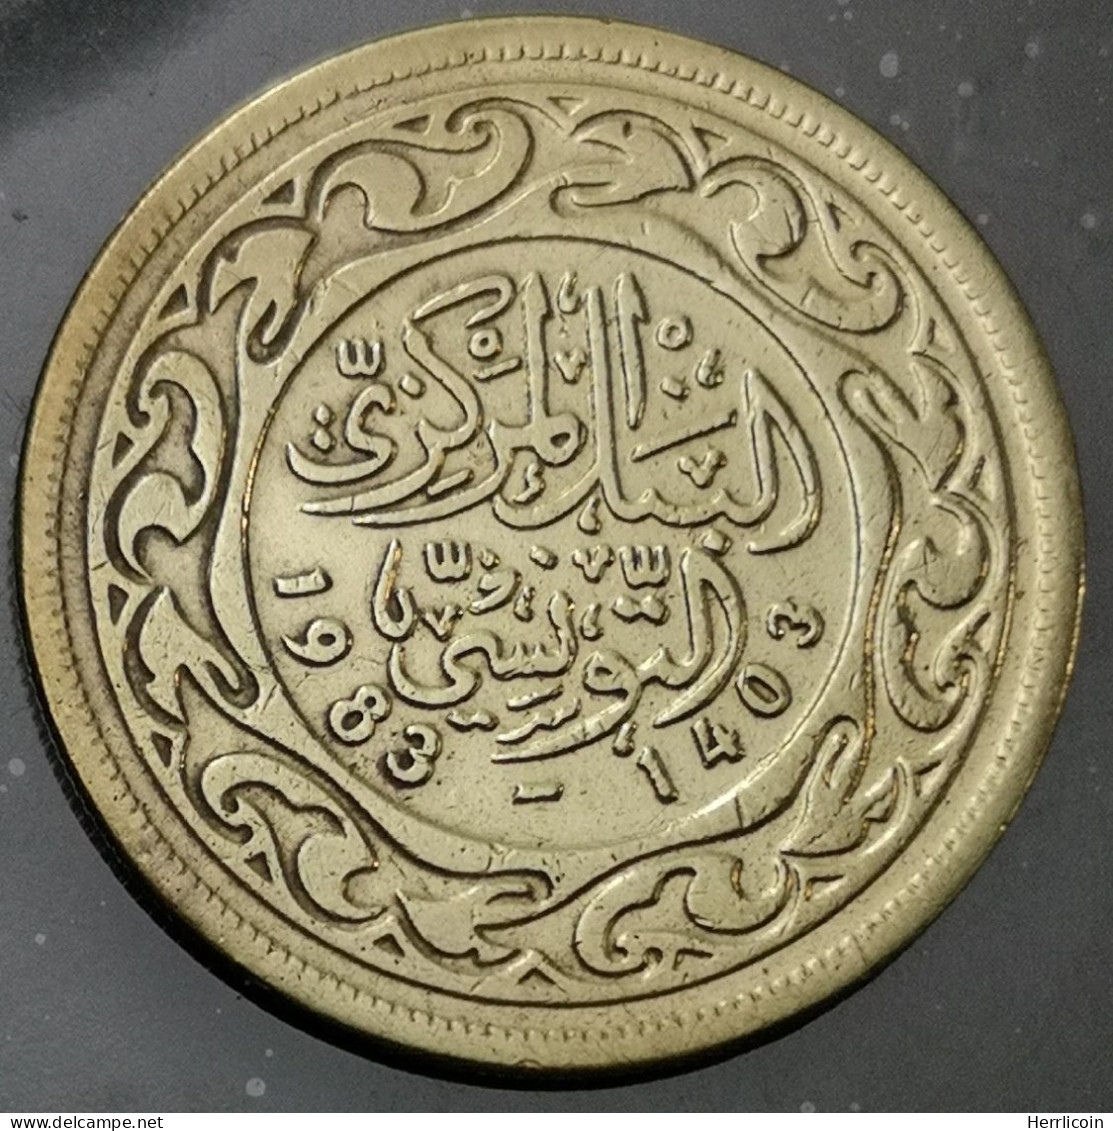 Monnaie Tunisie - 1403 (1983)  - 100 Millimes Petite Date - Tunisie